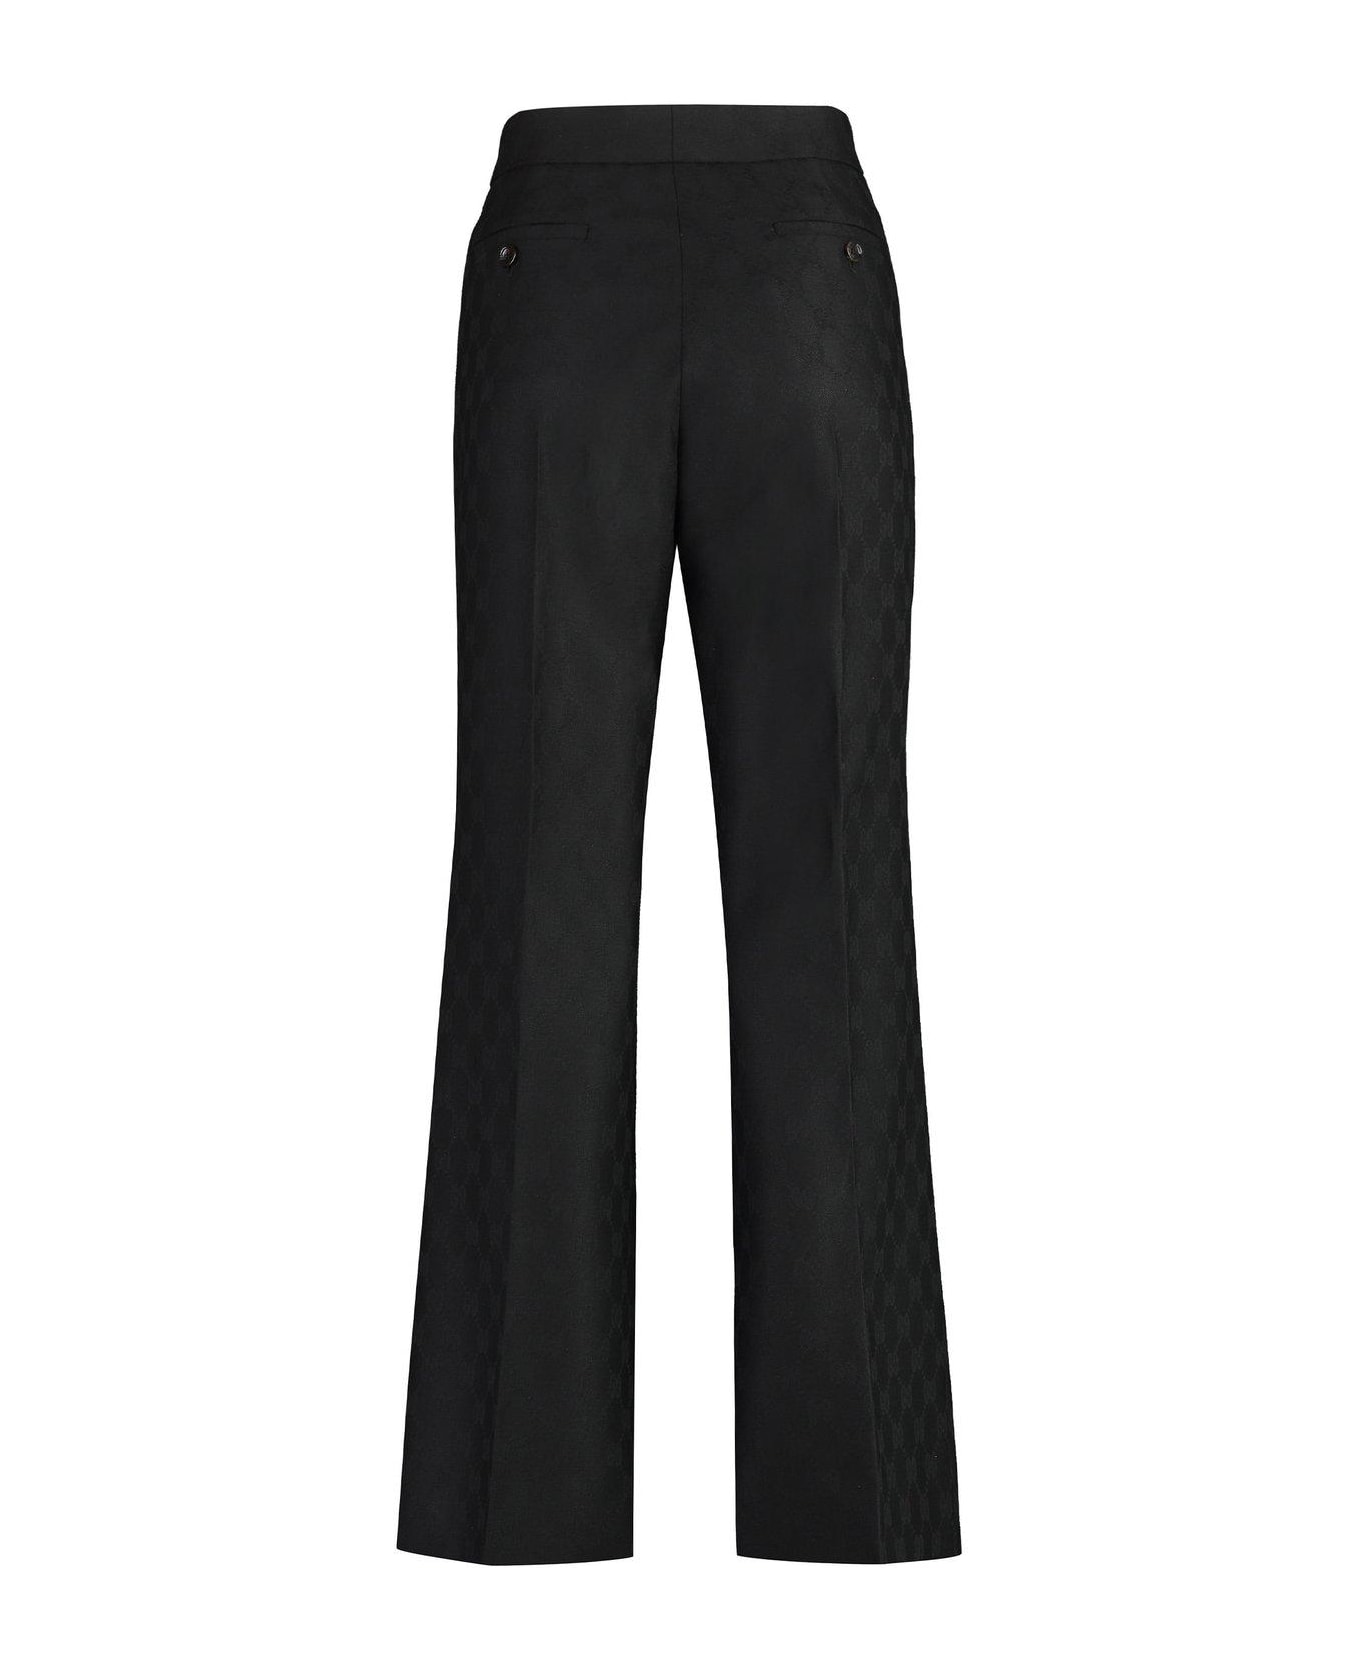 Gucci Gg Jacquard Tailored Trousers - Black